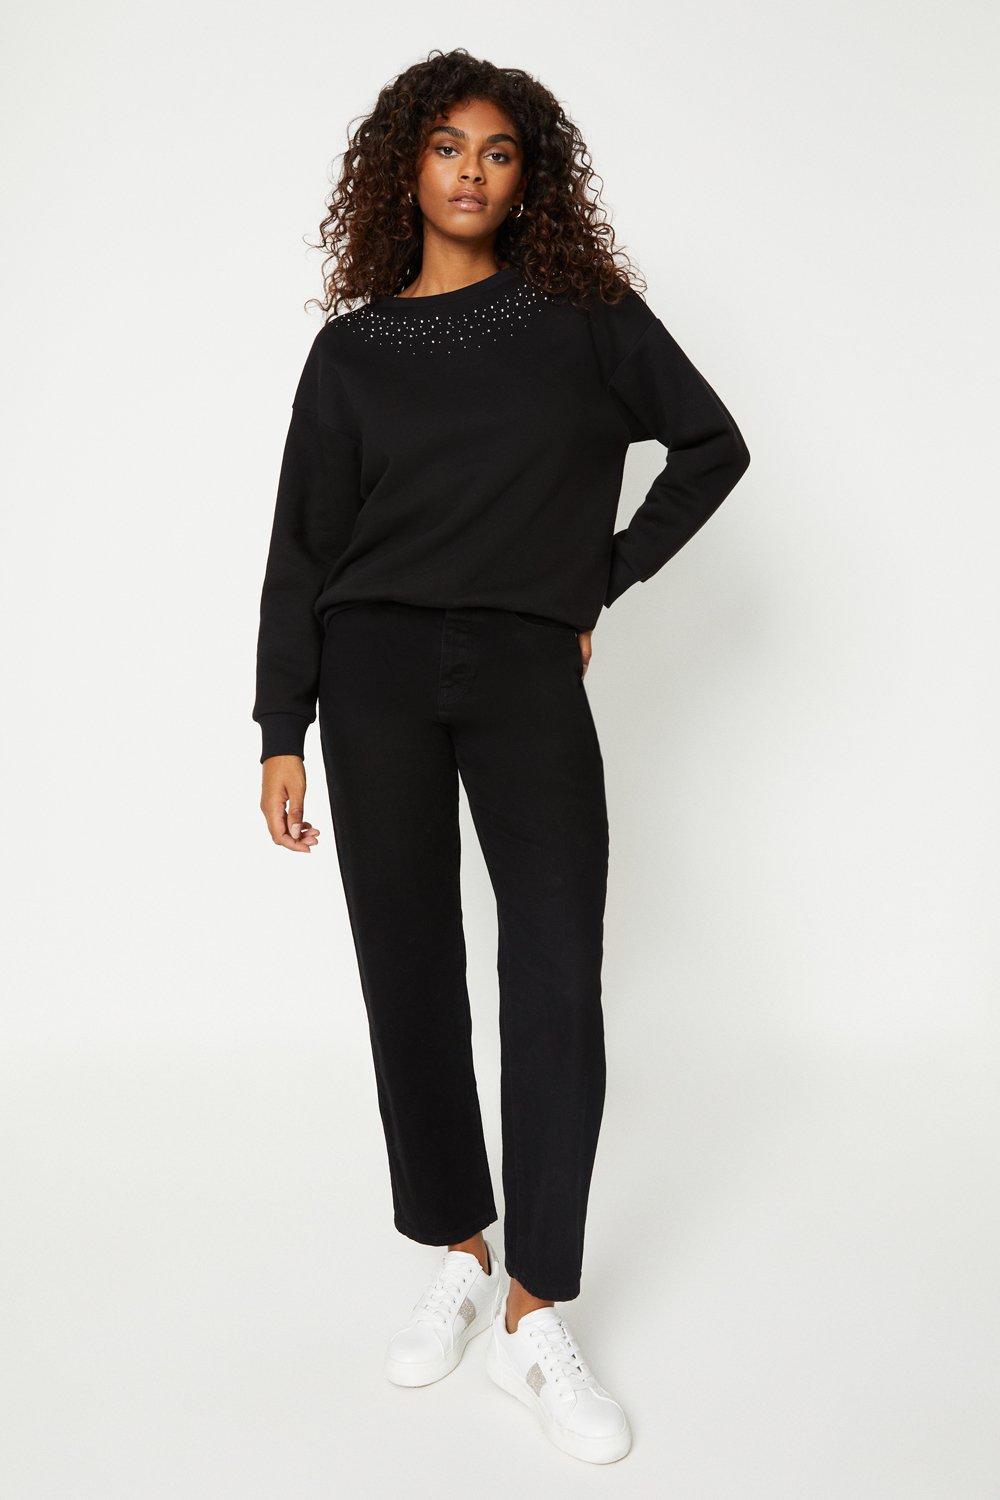 Women's Hotfix Embellished Sweatshirt - black - S